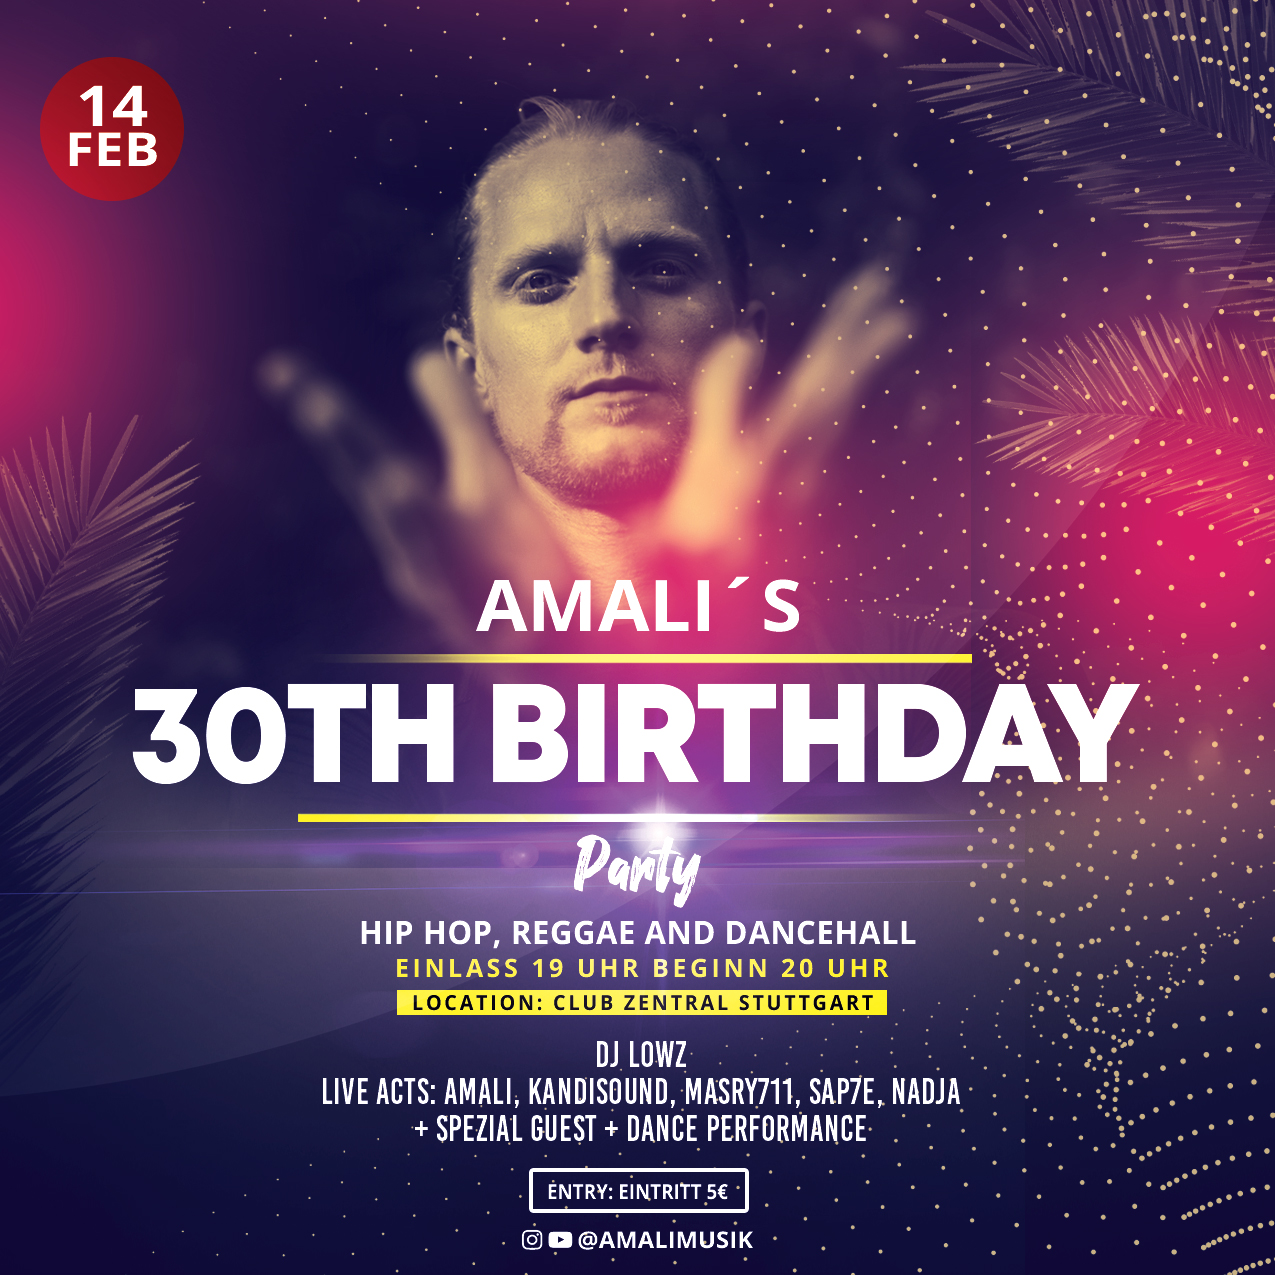 Konzert: Amalis 30th Birthday